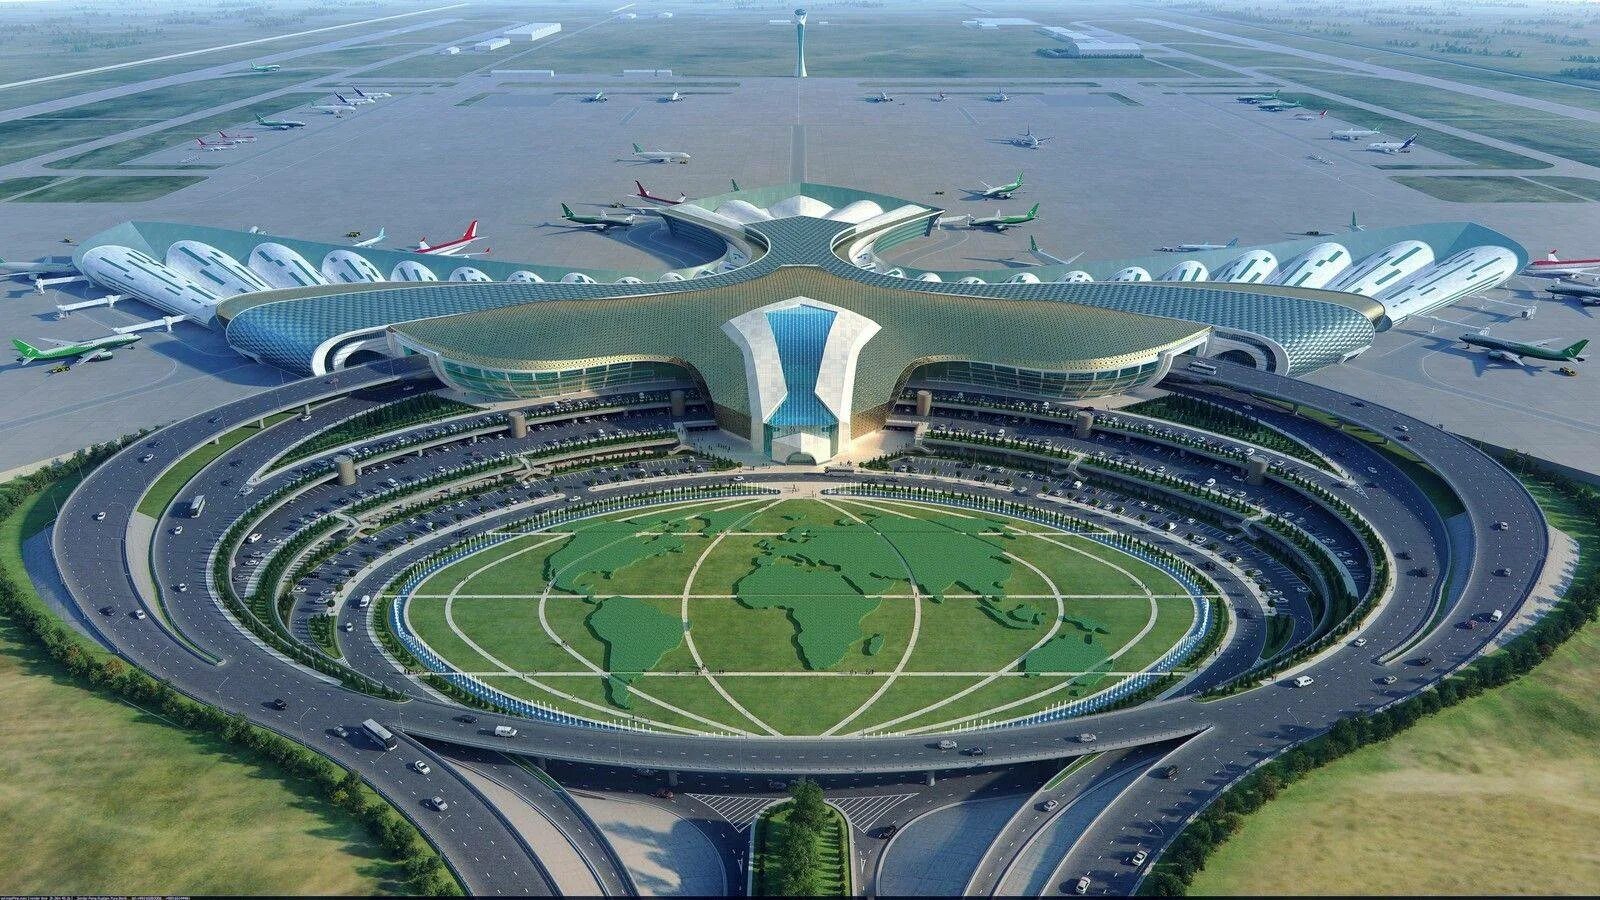 Аэропорты средней азии. Международный аэропорт Ашхабад. Международный аэропорт Ашхабад, Туркменистан. Архитектура аэропорт Ашхабад Туркменистане. Международный аэропорт города Ашхабада (Туркмения).